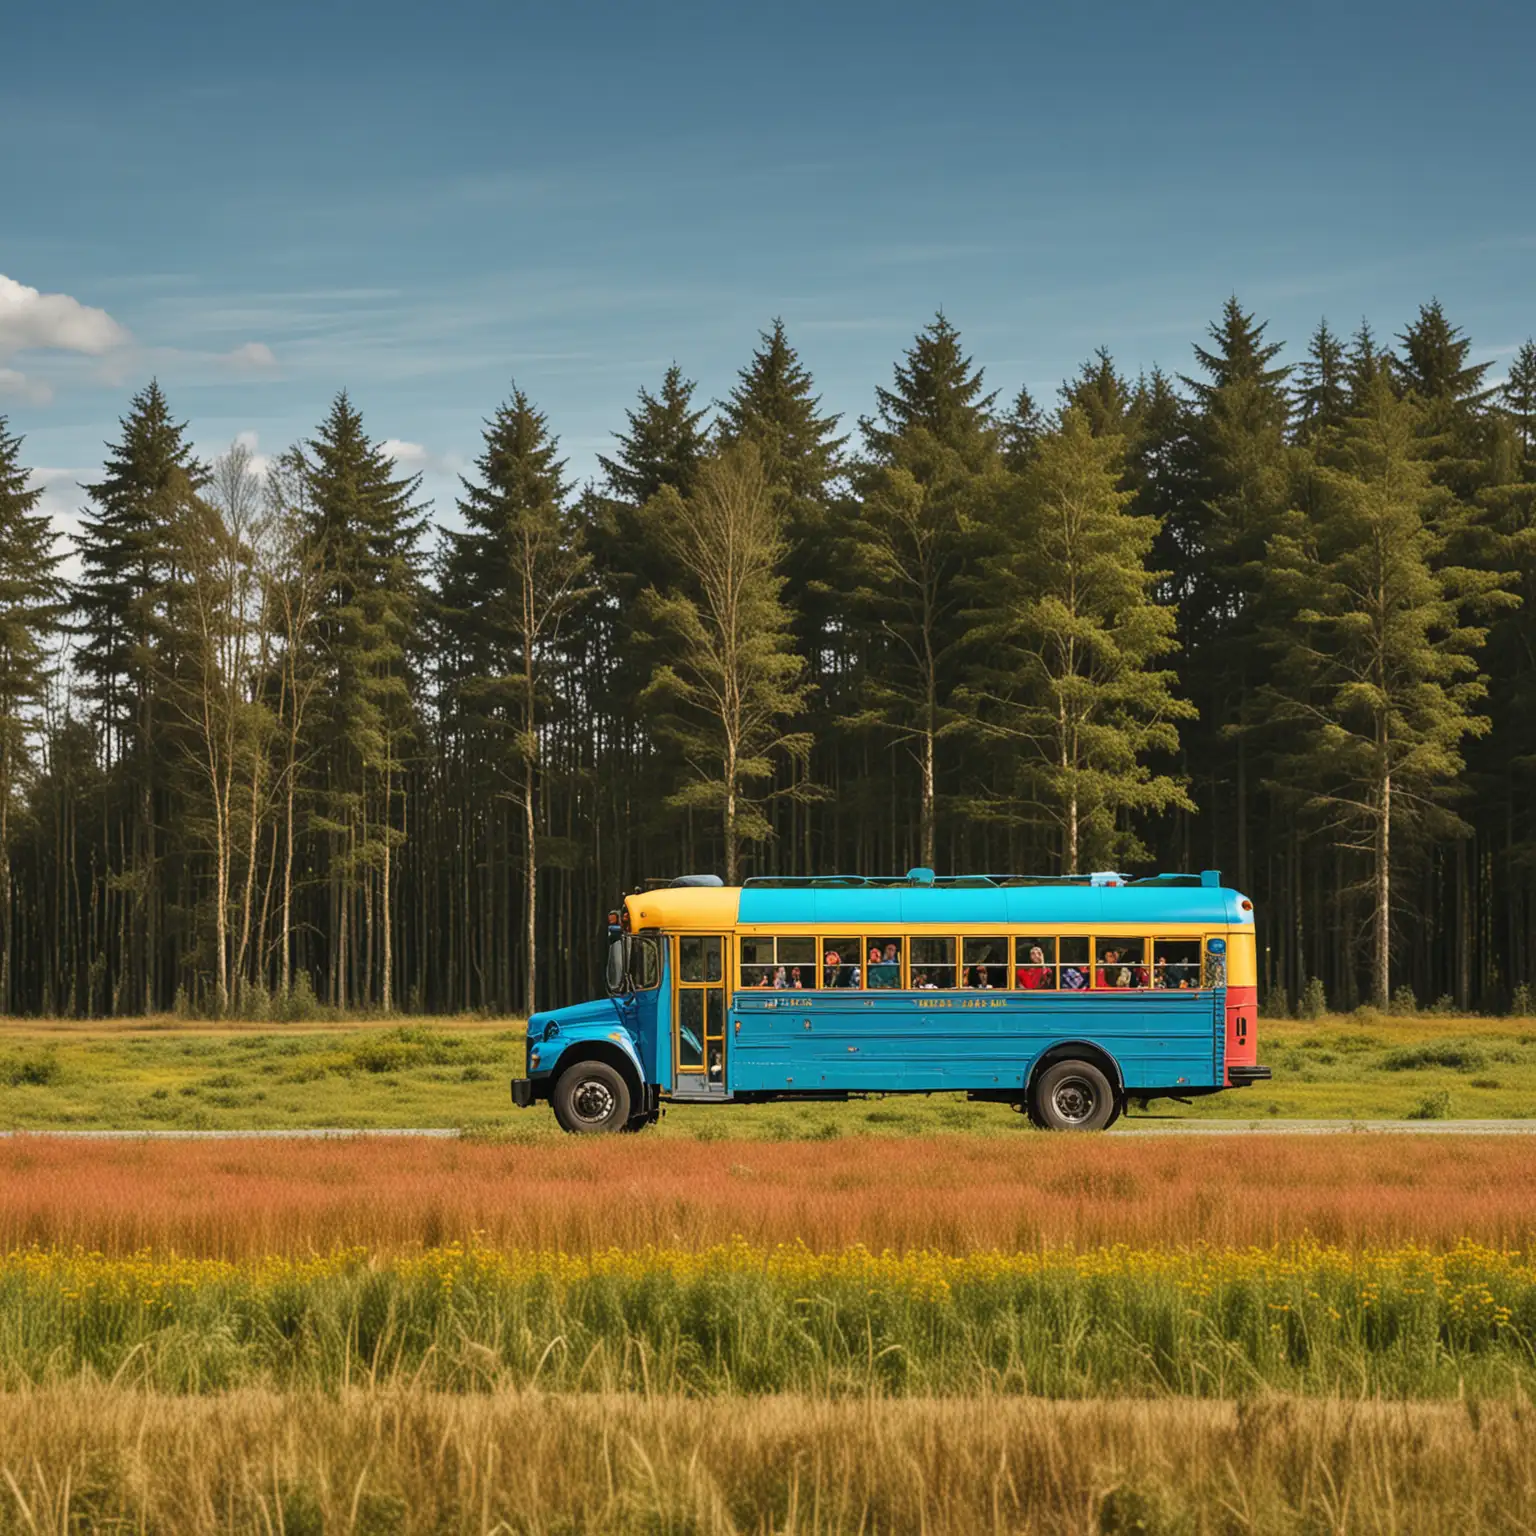 Vibrant School Bus Journey through Countryside Fields